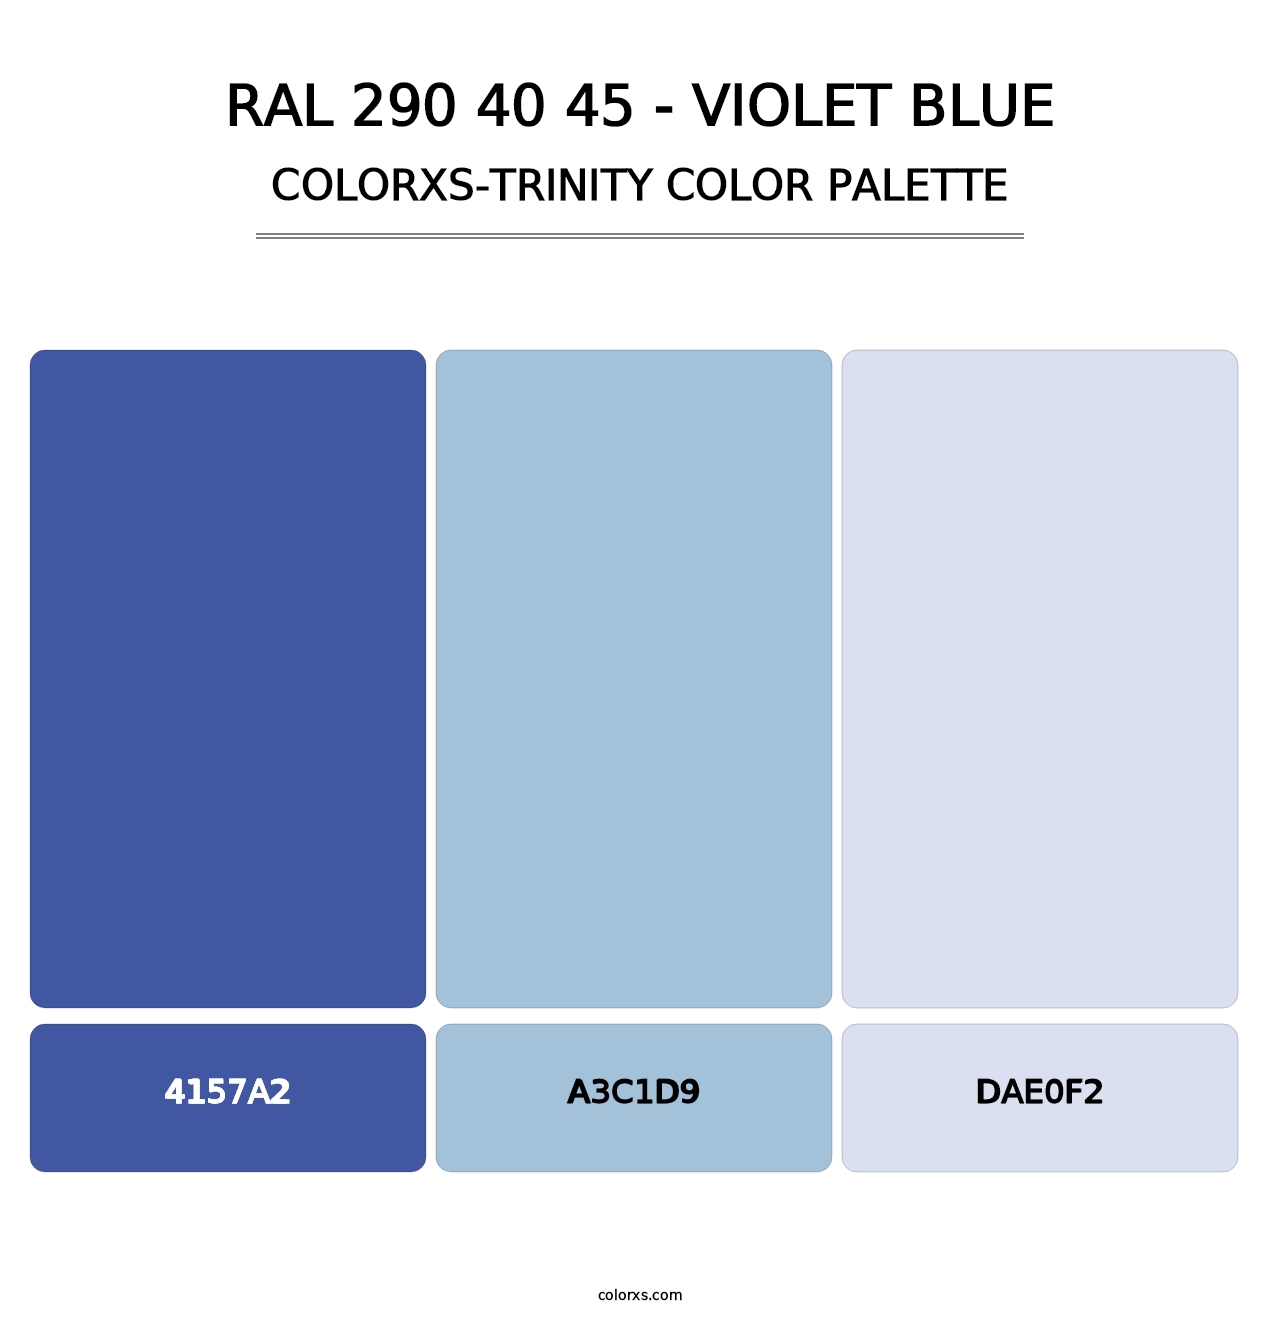 RAL 290 40 45 - Violet Blue - Colorxs Trinity Palette